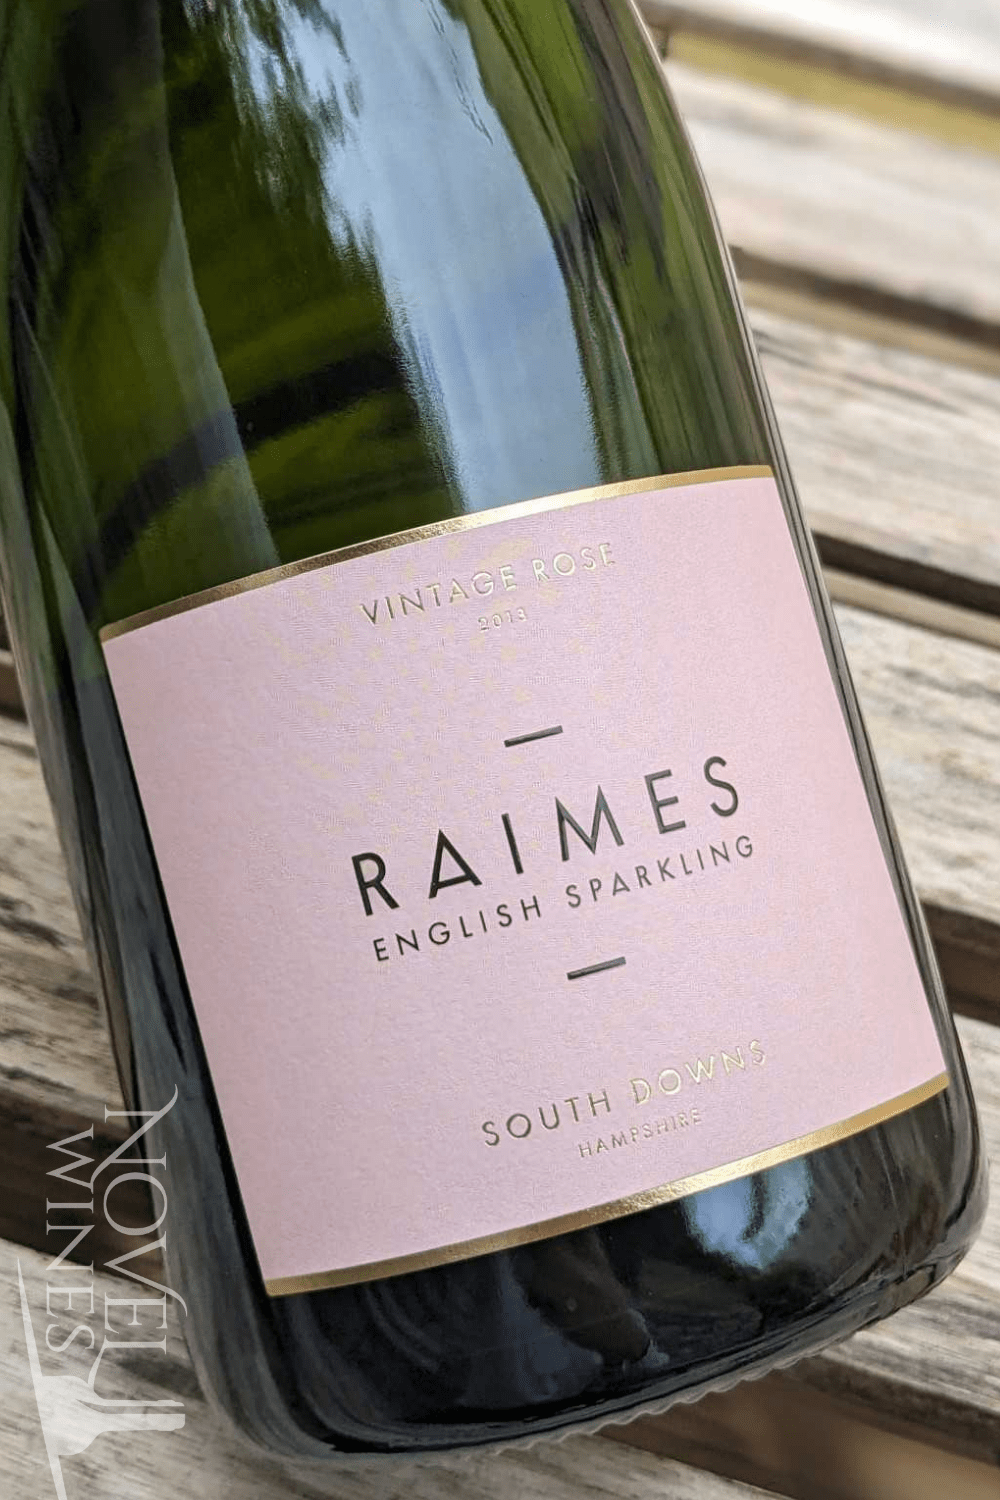 Raimes Sparkling Wine Raimes Vintage Rose English Sparkling 2015, England